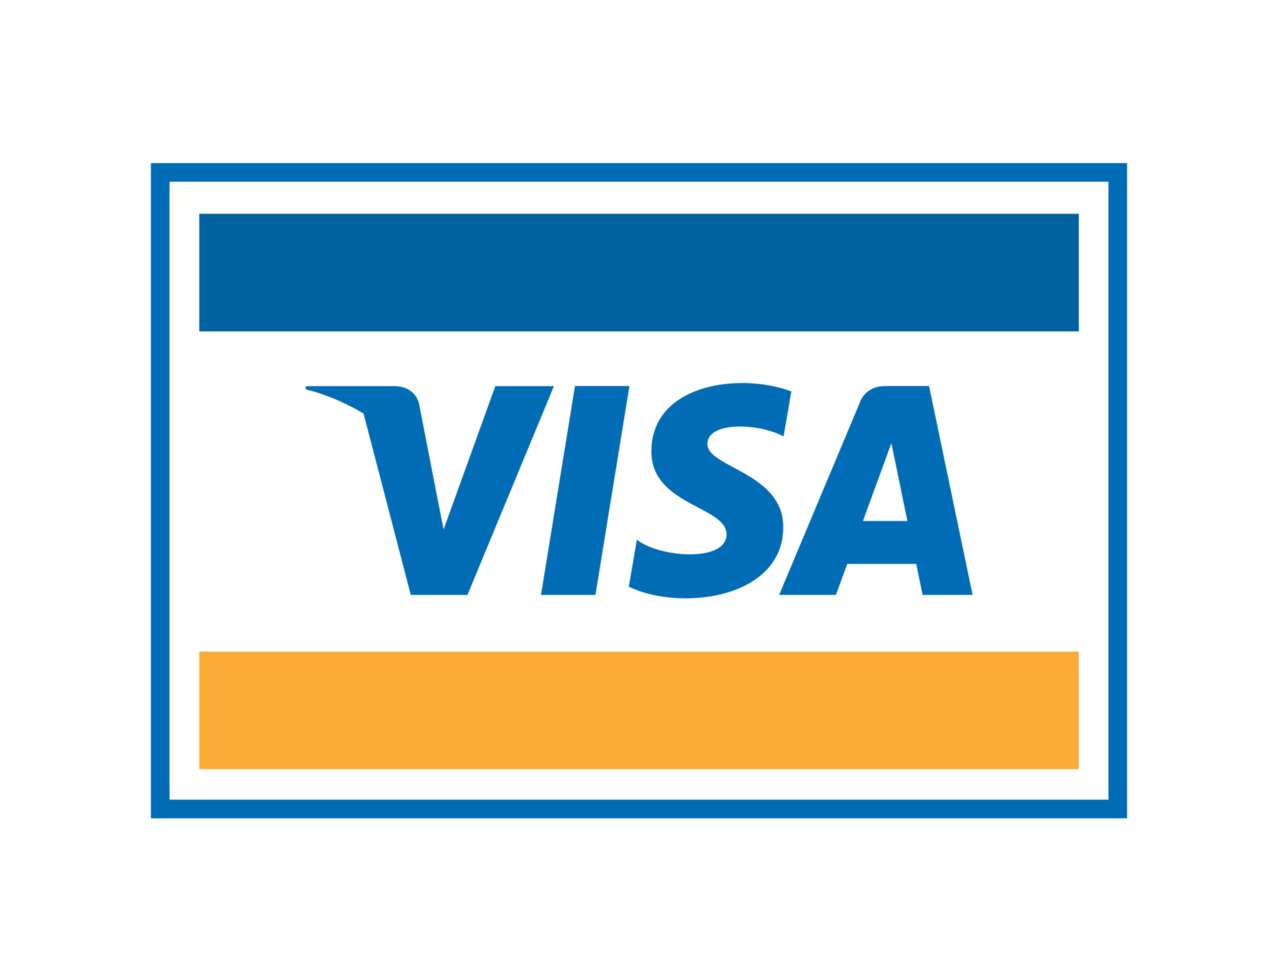 Visa logo png, Visa icon transparent png